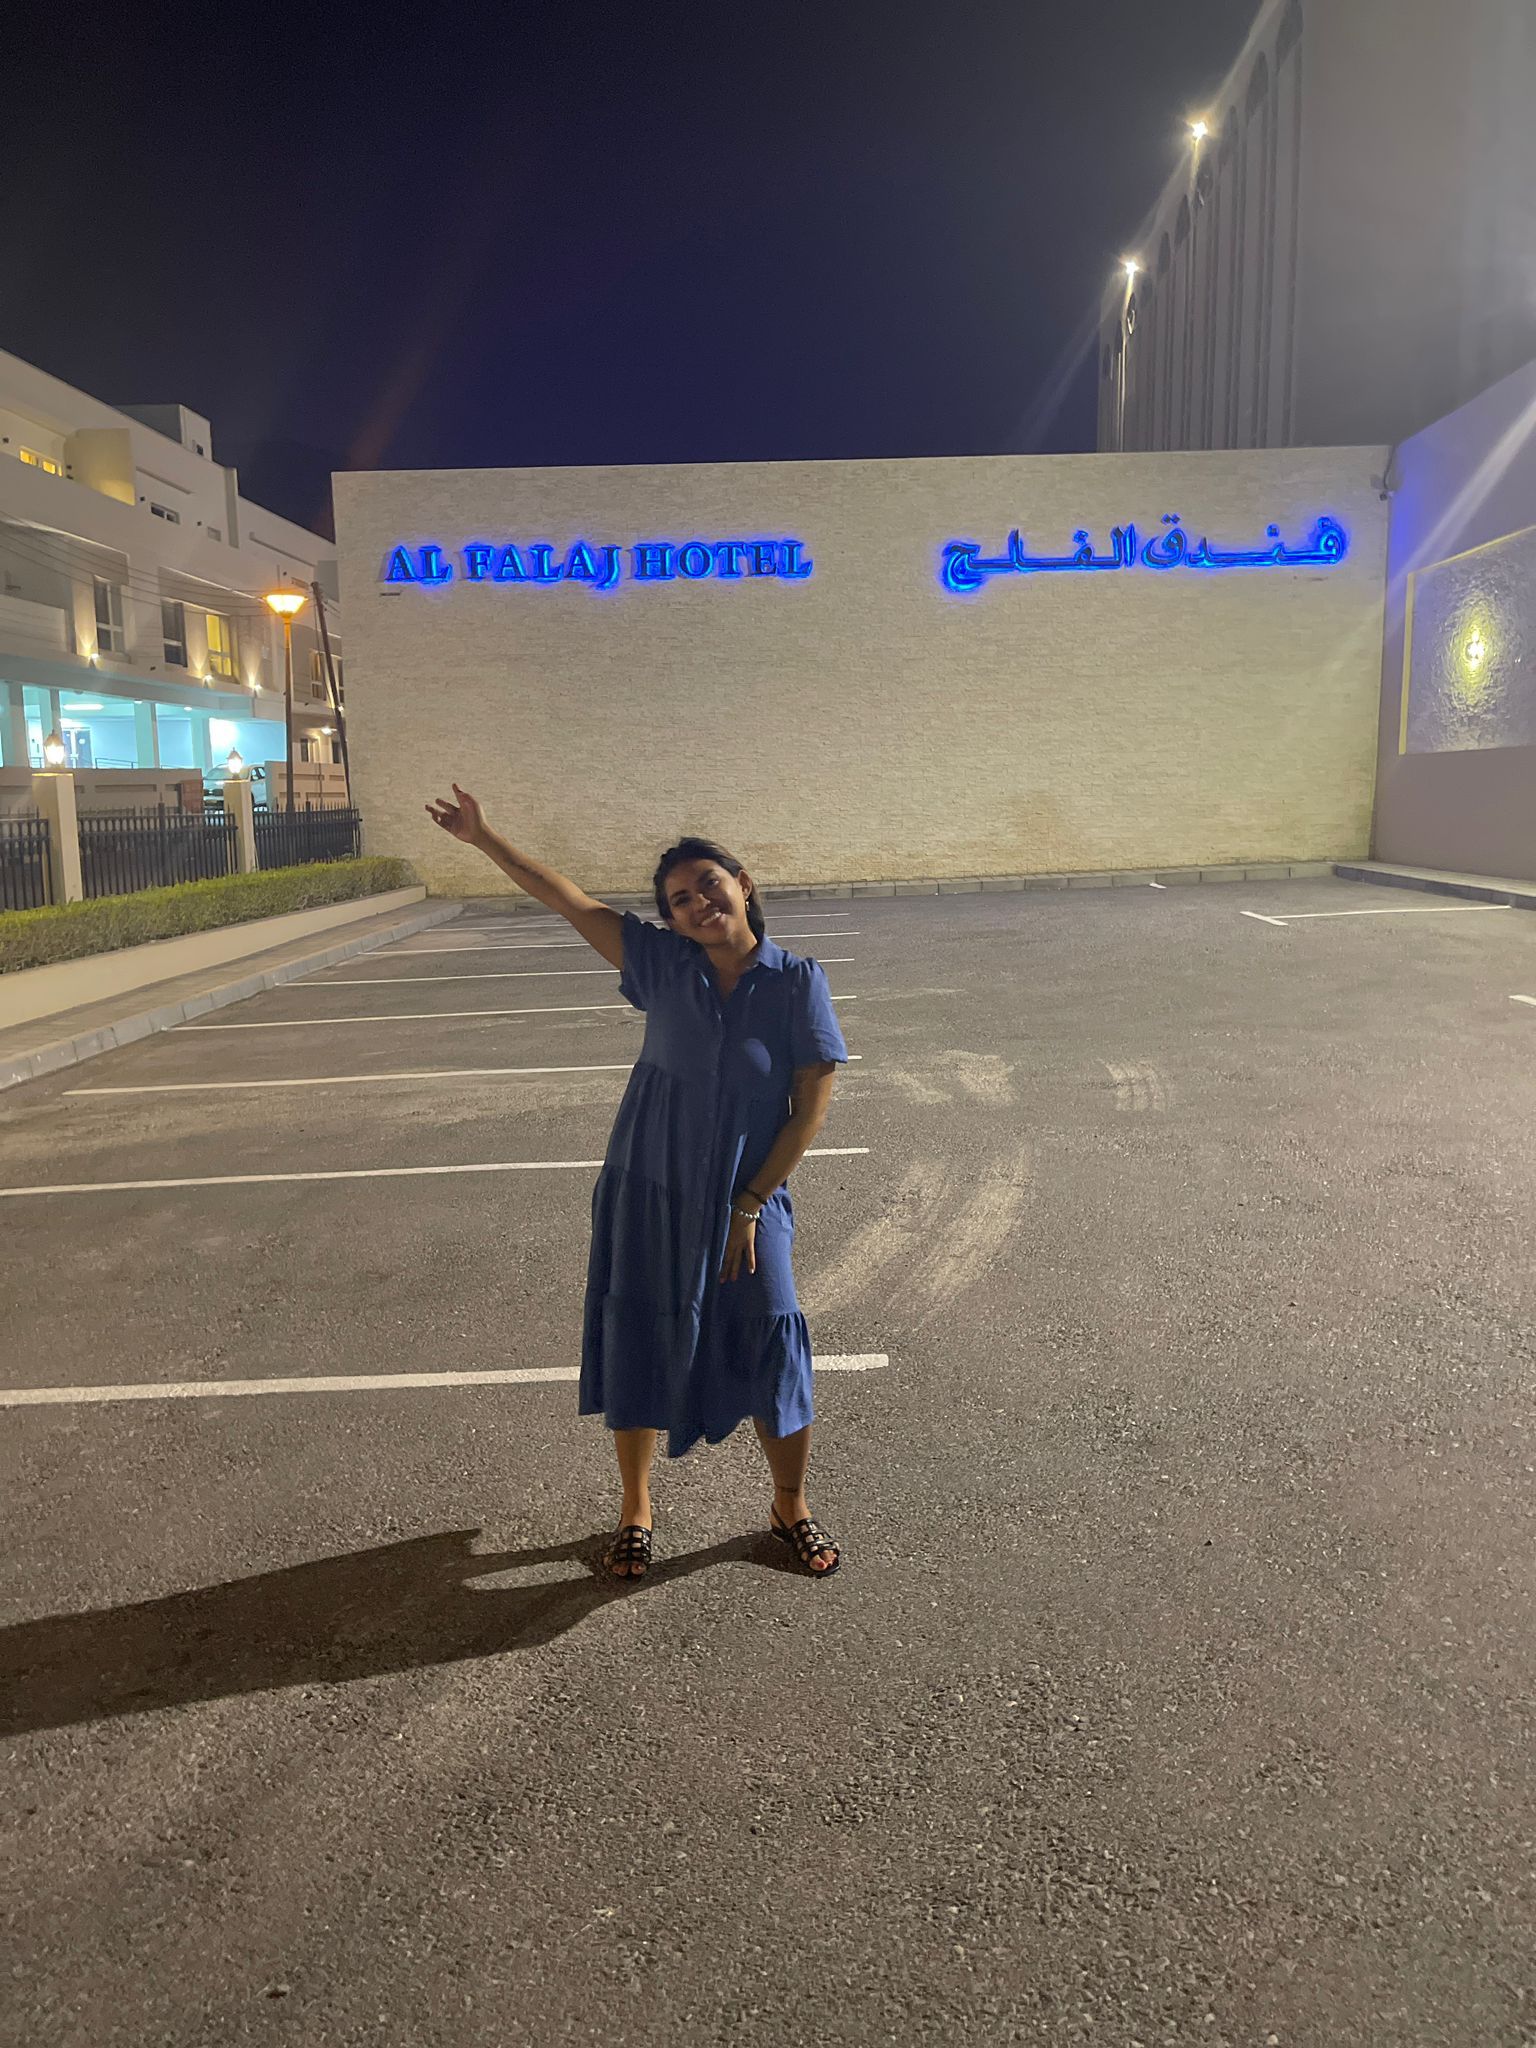 Al Falaj Hotel Where You Should Stay When in Muscat, Oman